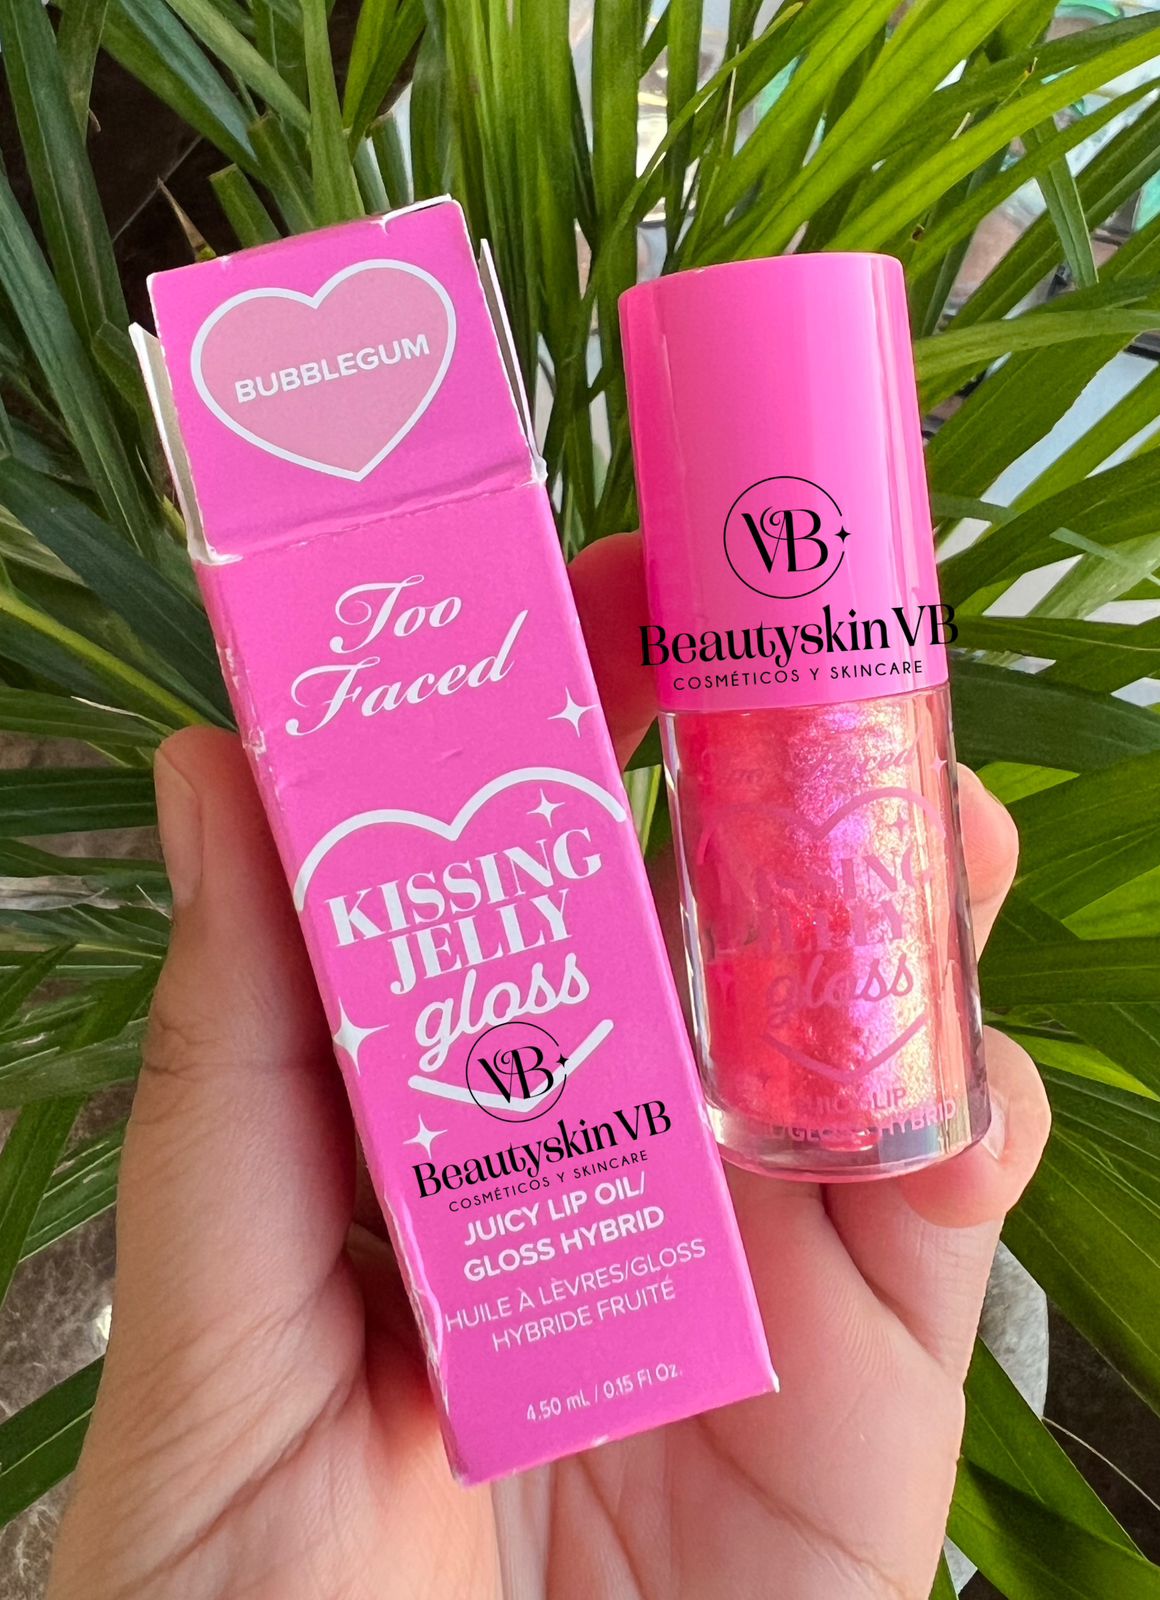 Too Faced | Kissing Jelly Gloss | Juicy Lip Oil Gloss Hybrid